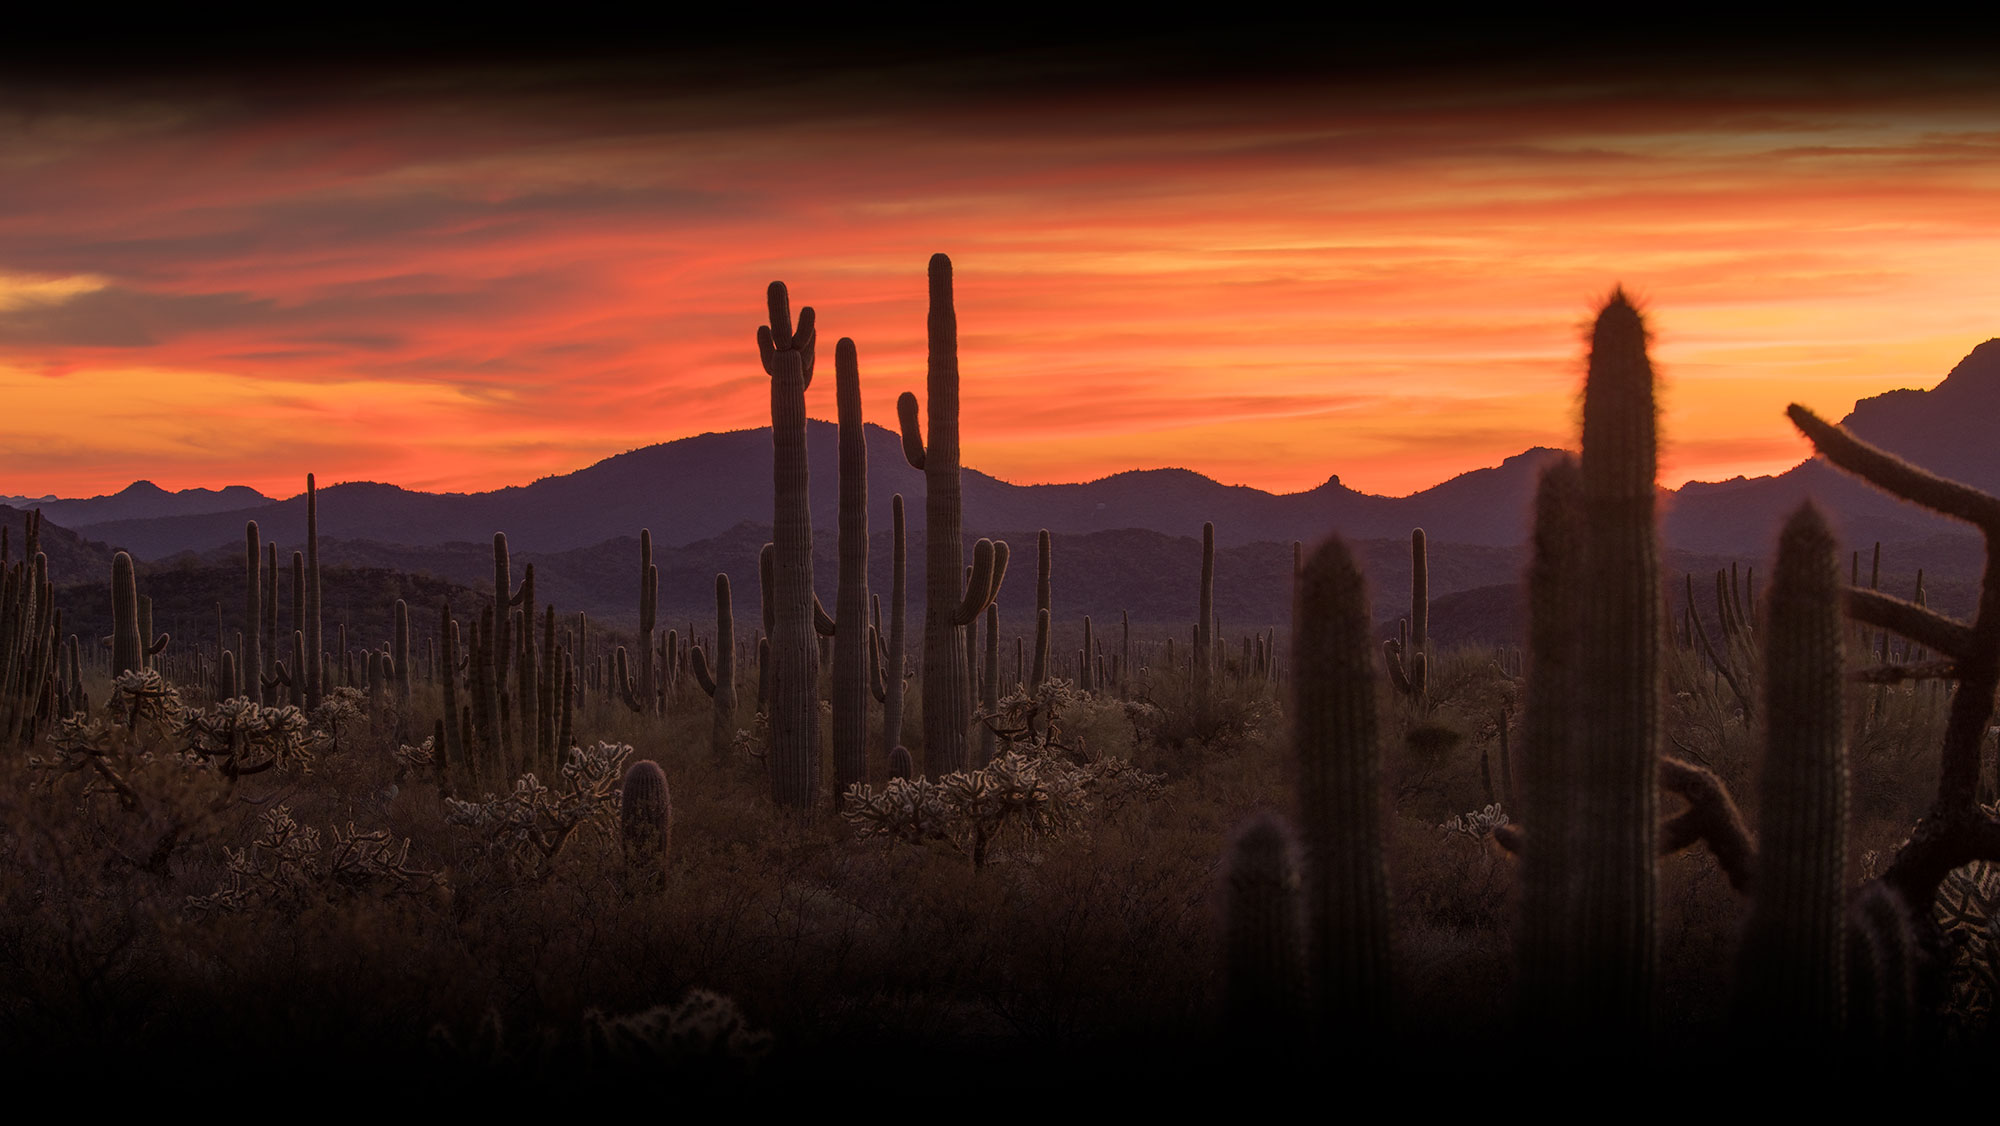 Photograph of many Cacti species in Arizona